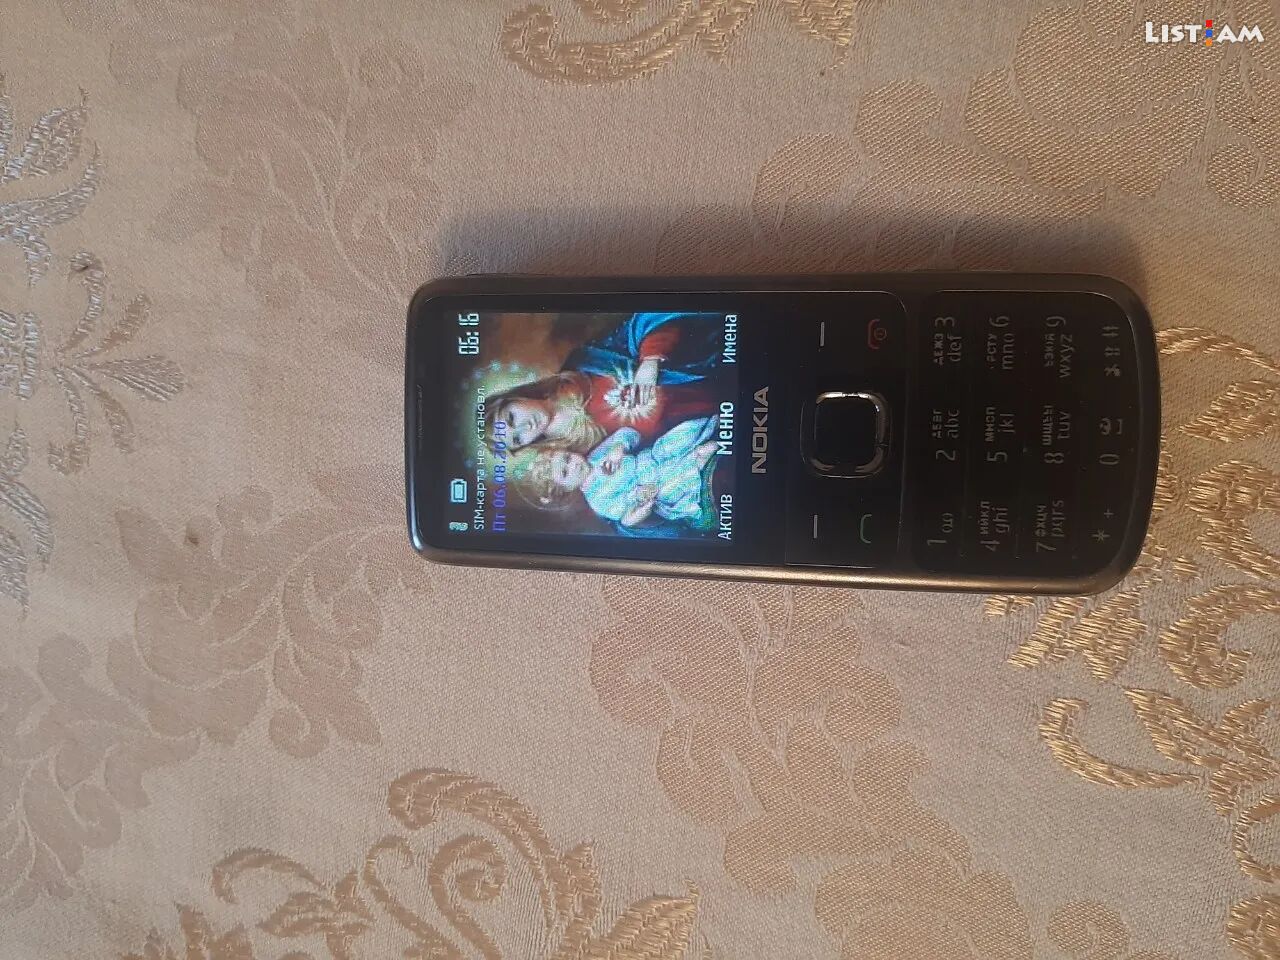 Nokia 6700 slide, 4